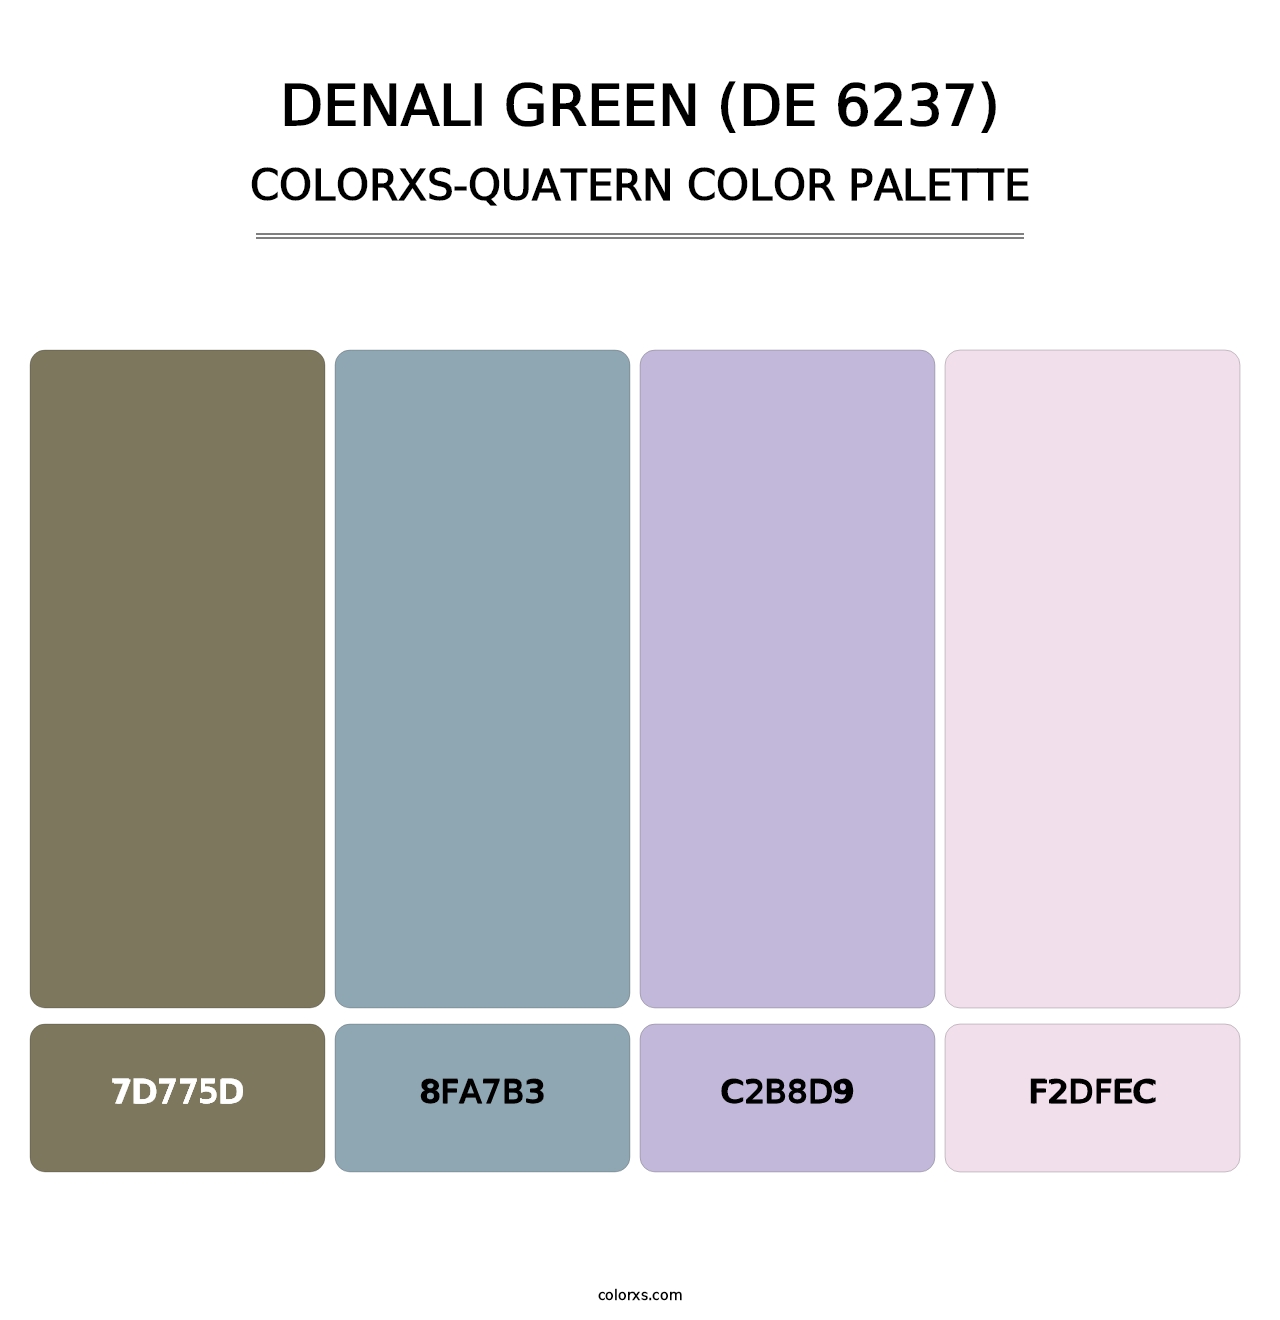 Denali Green (DE 6237) - Colorxs Quatern Palette